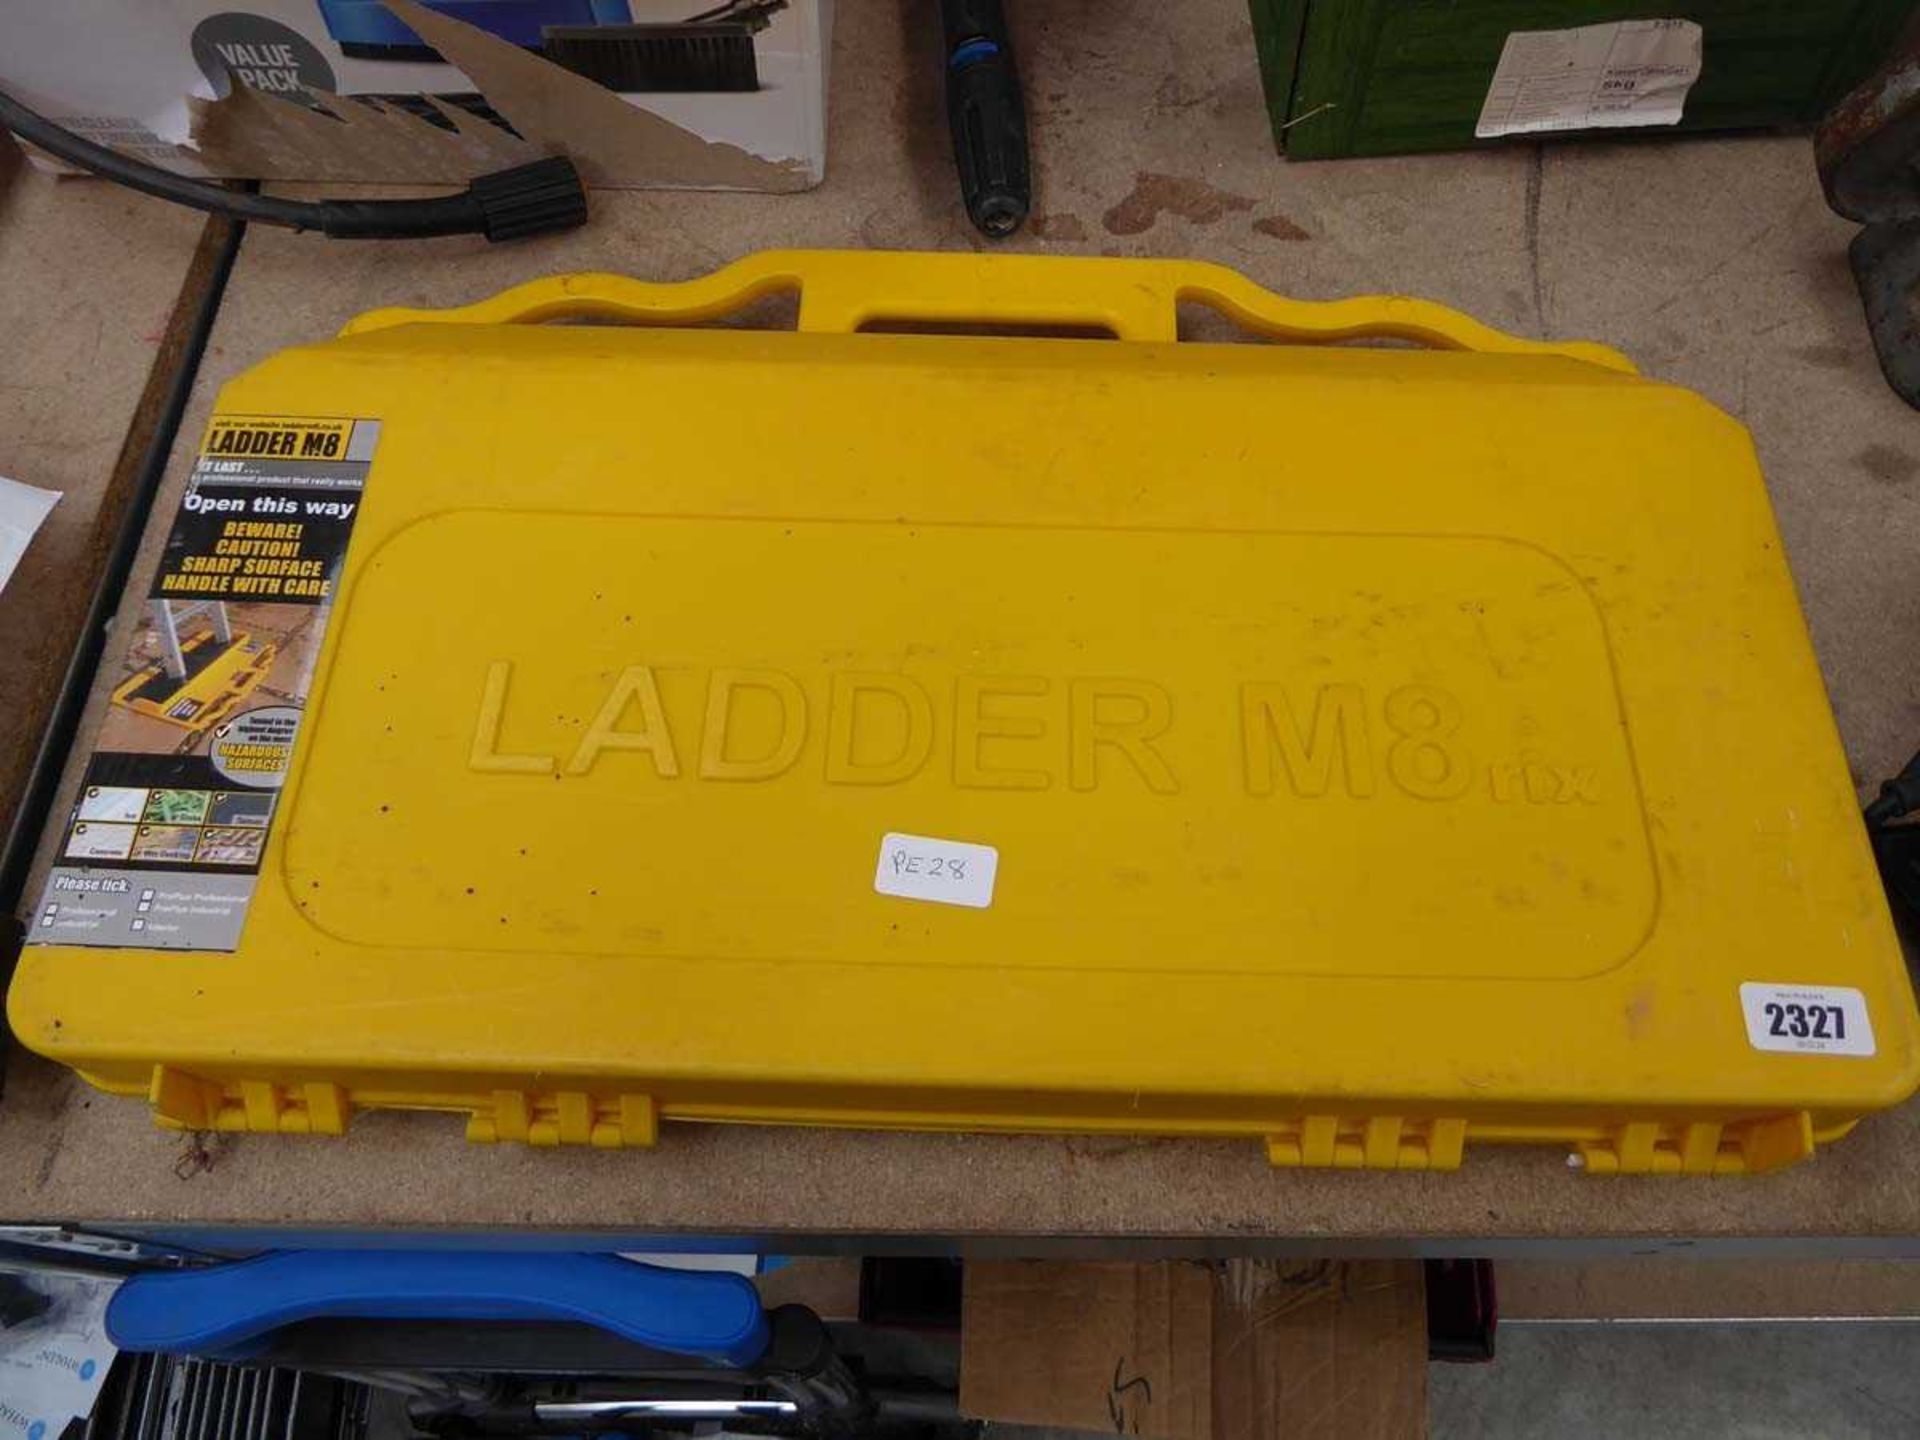 Cased LadderMate